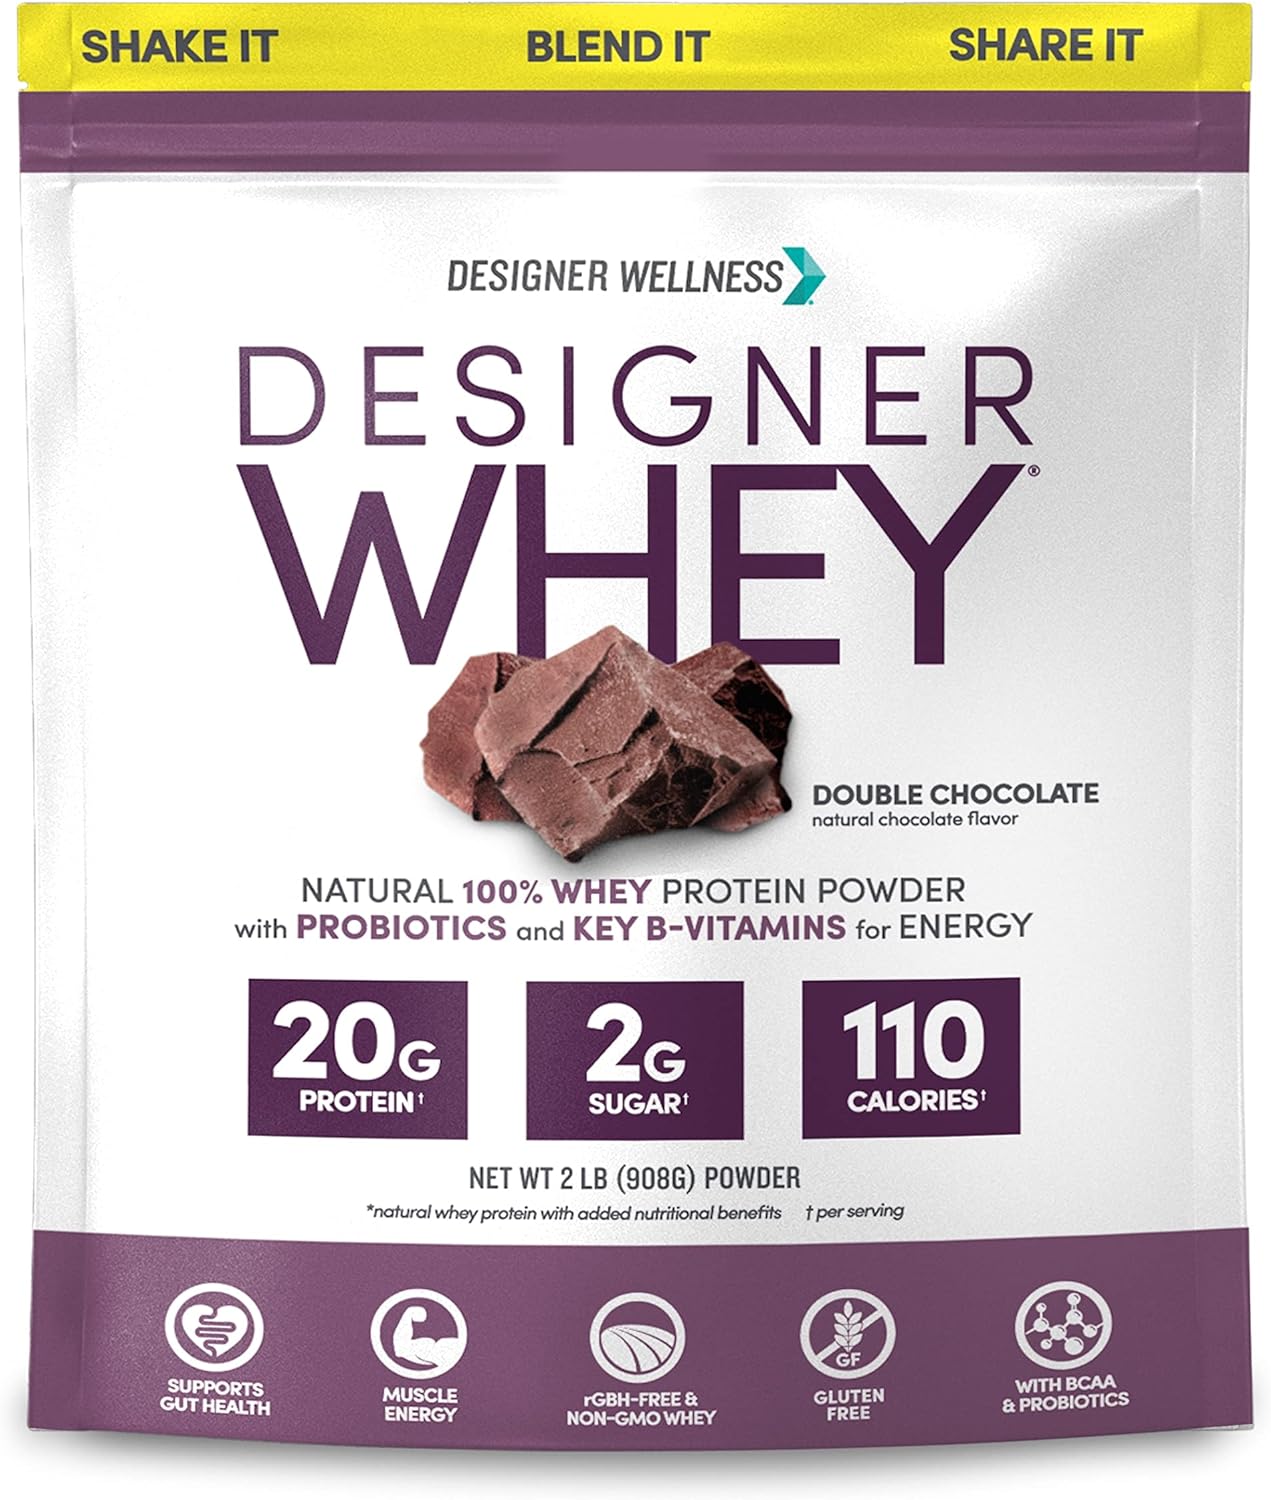 Designer Wellness, Designer Whey, Natural Whey Protein Powder with Probiotics, Fiber, and Key B-Vitamins for Energy, Gluten-Free & Kosher, Double Chocolate, 2 lb